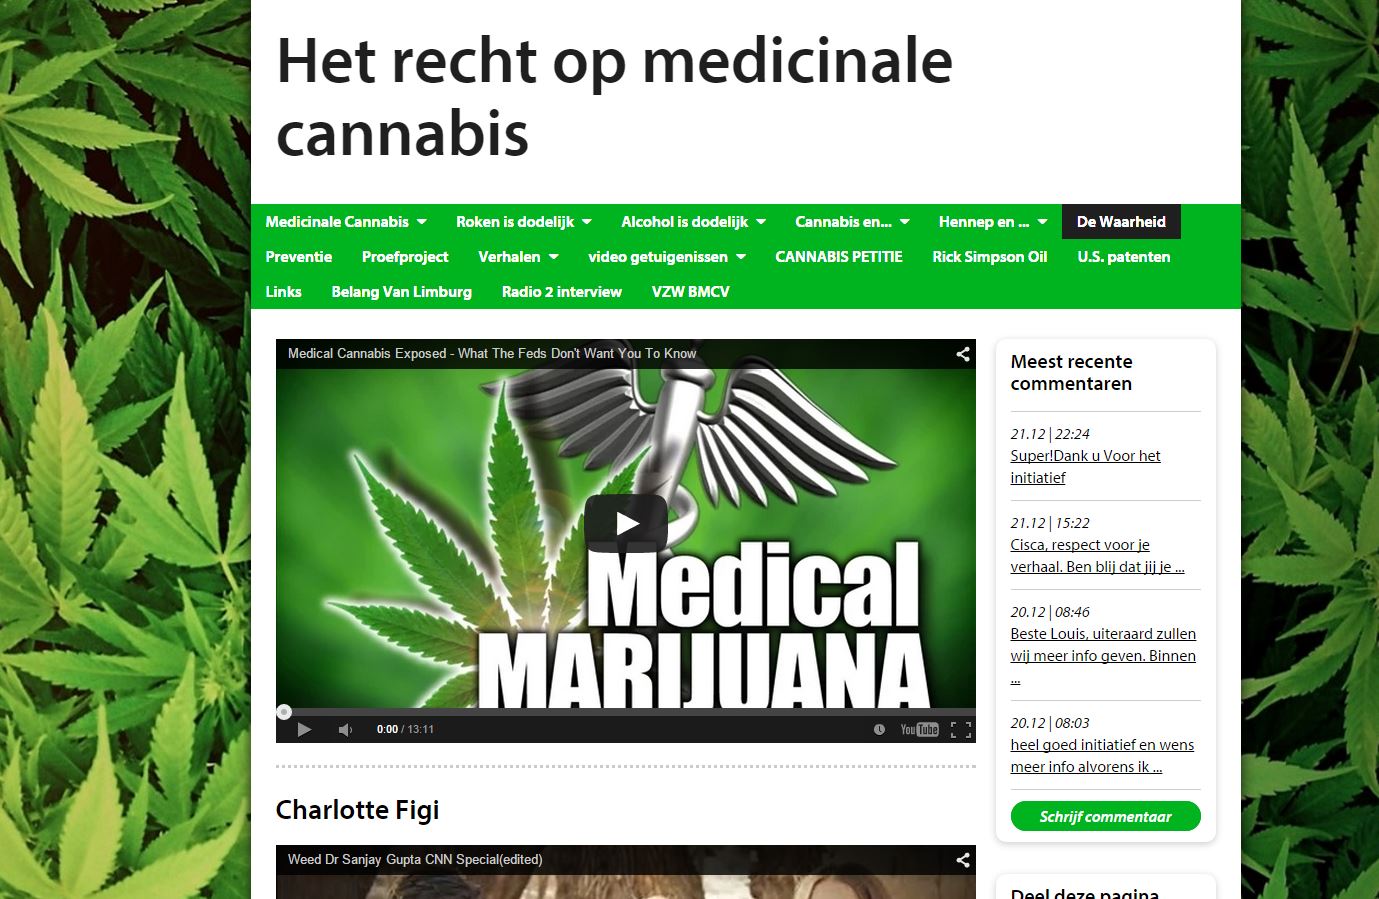 Impressie van de website 'Medicinale cannabis' van BMCV